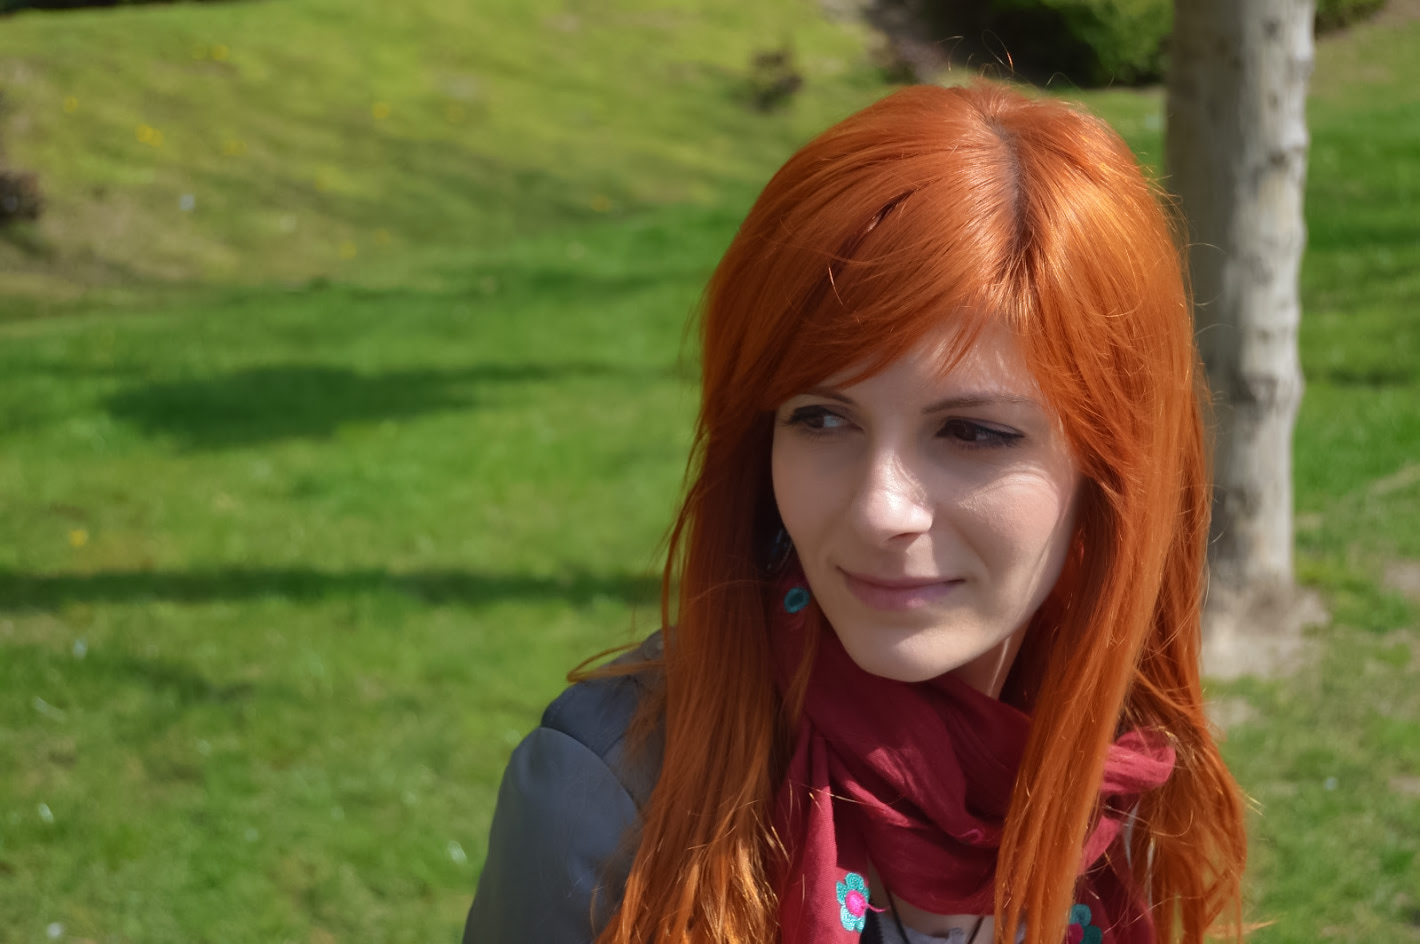 Alexandru Botez Women Redhead Long Hair Straight Hair Looking Away Scarf Portrait Depth Of Field Gra 1420x944